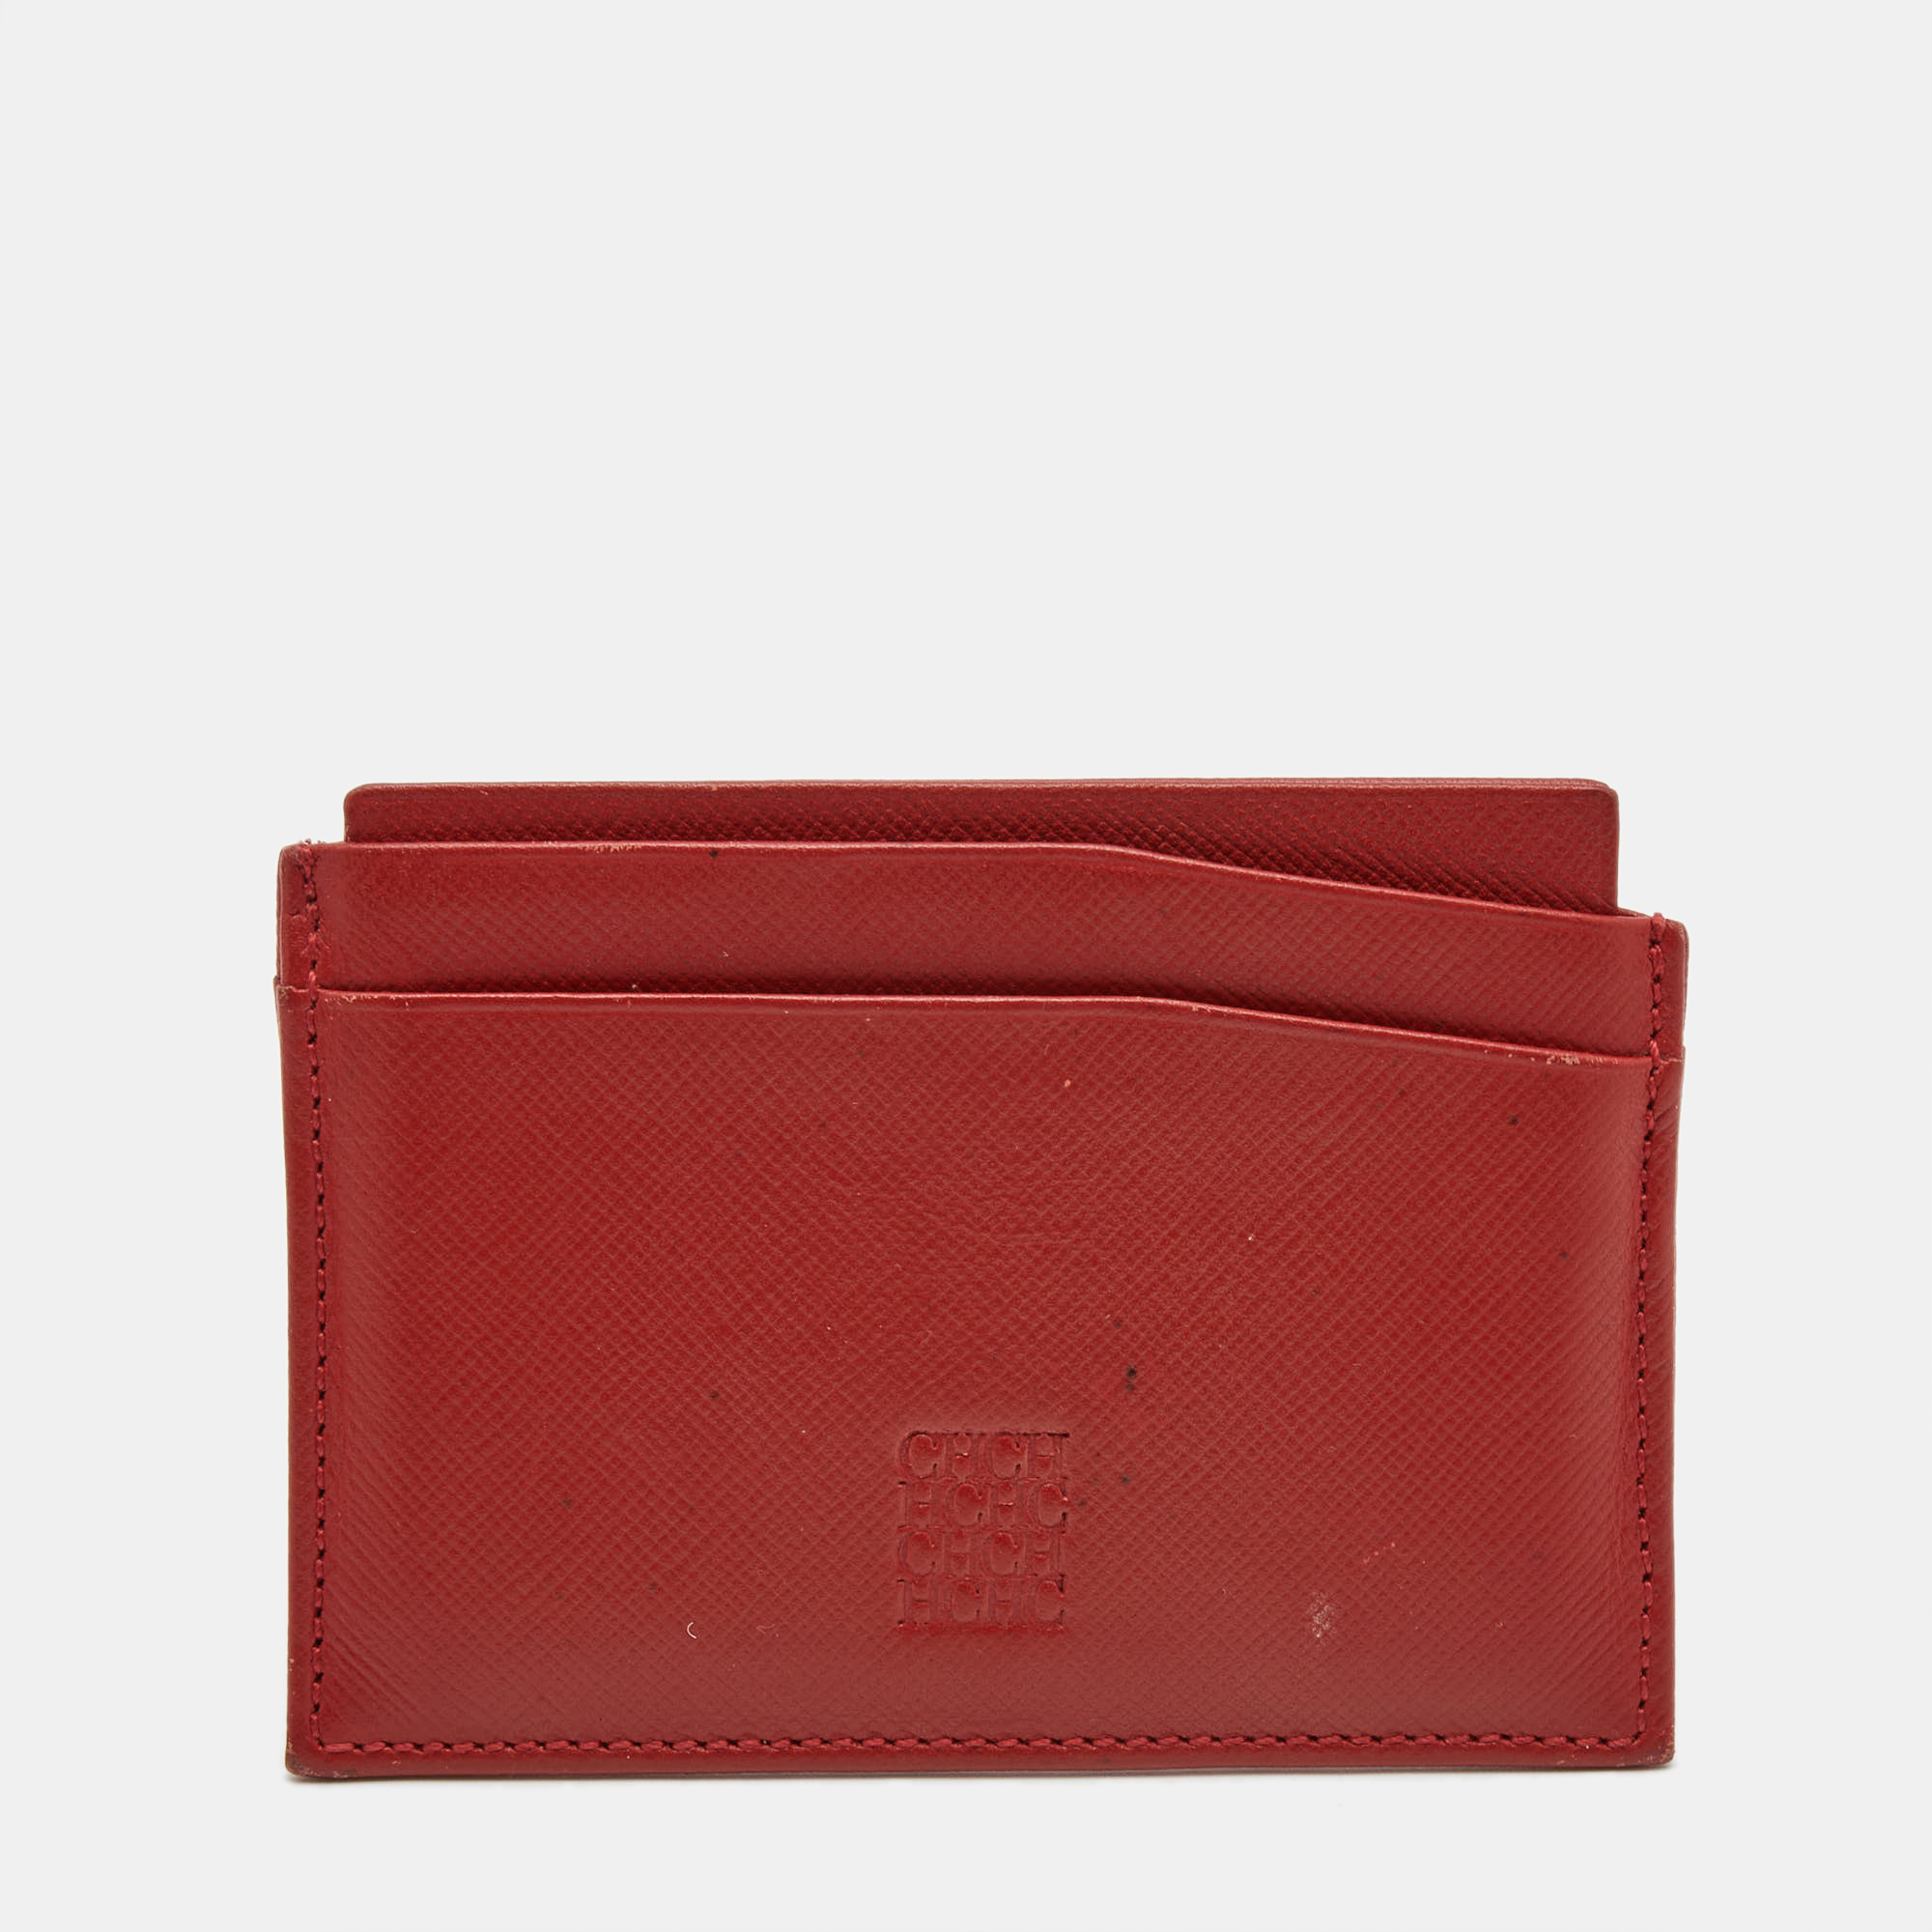 Pre-owned Carolina Herrera Red Leather Card Case